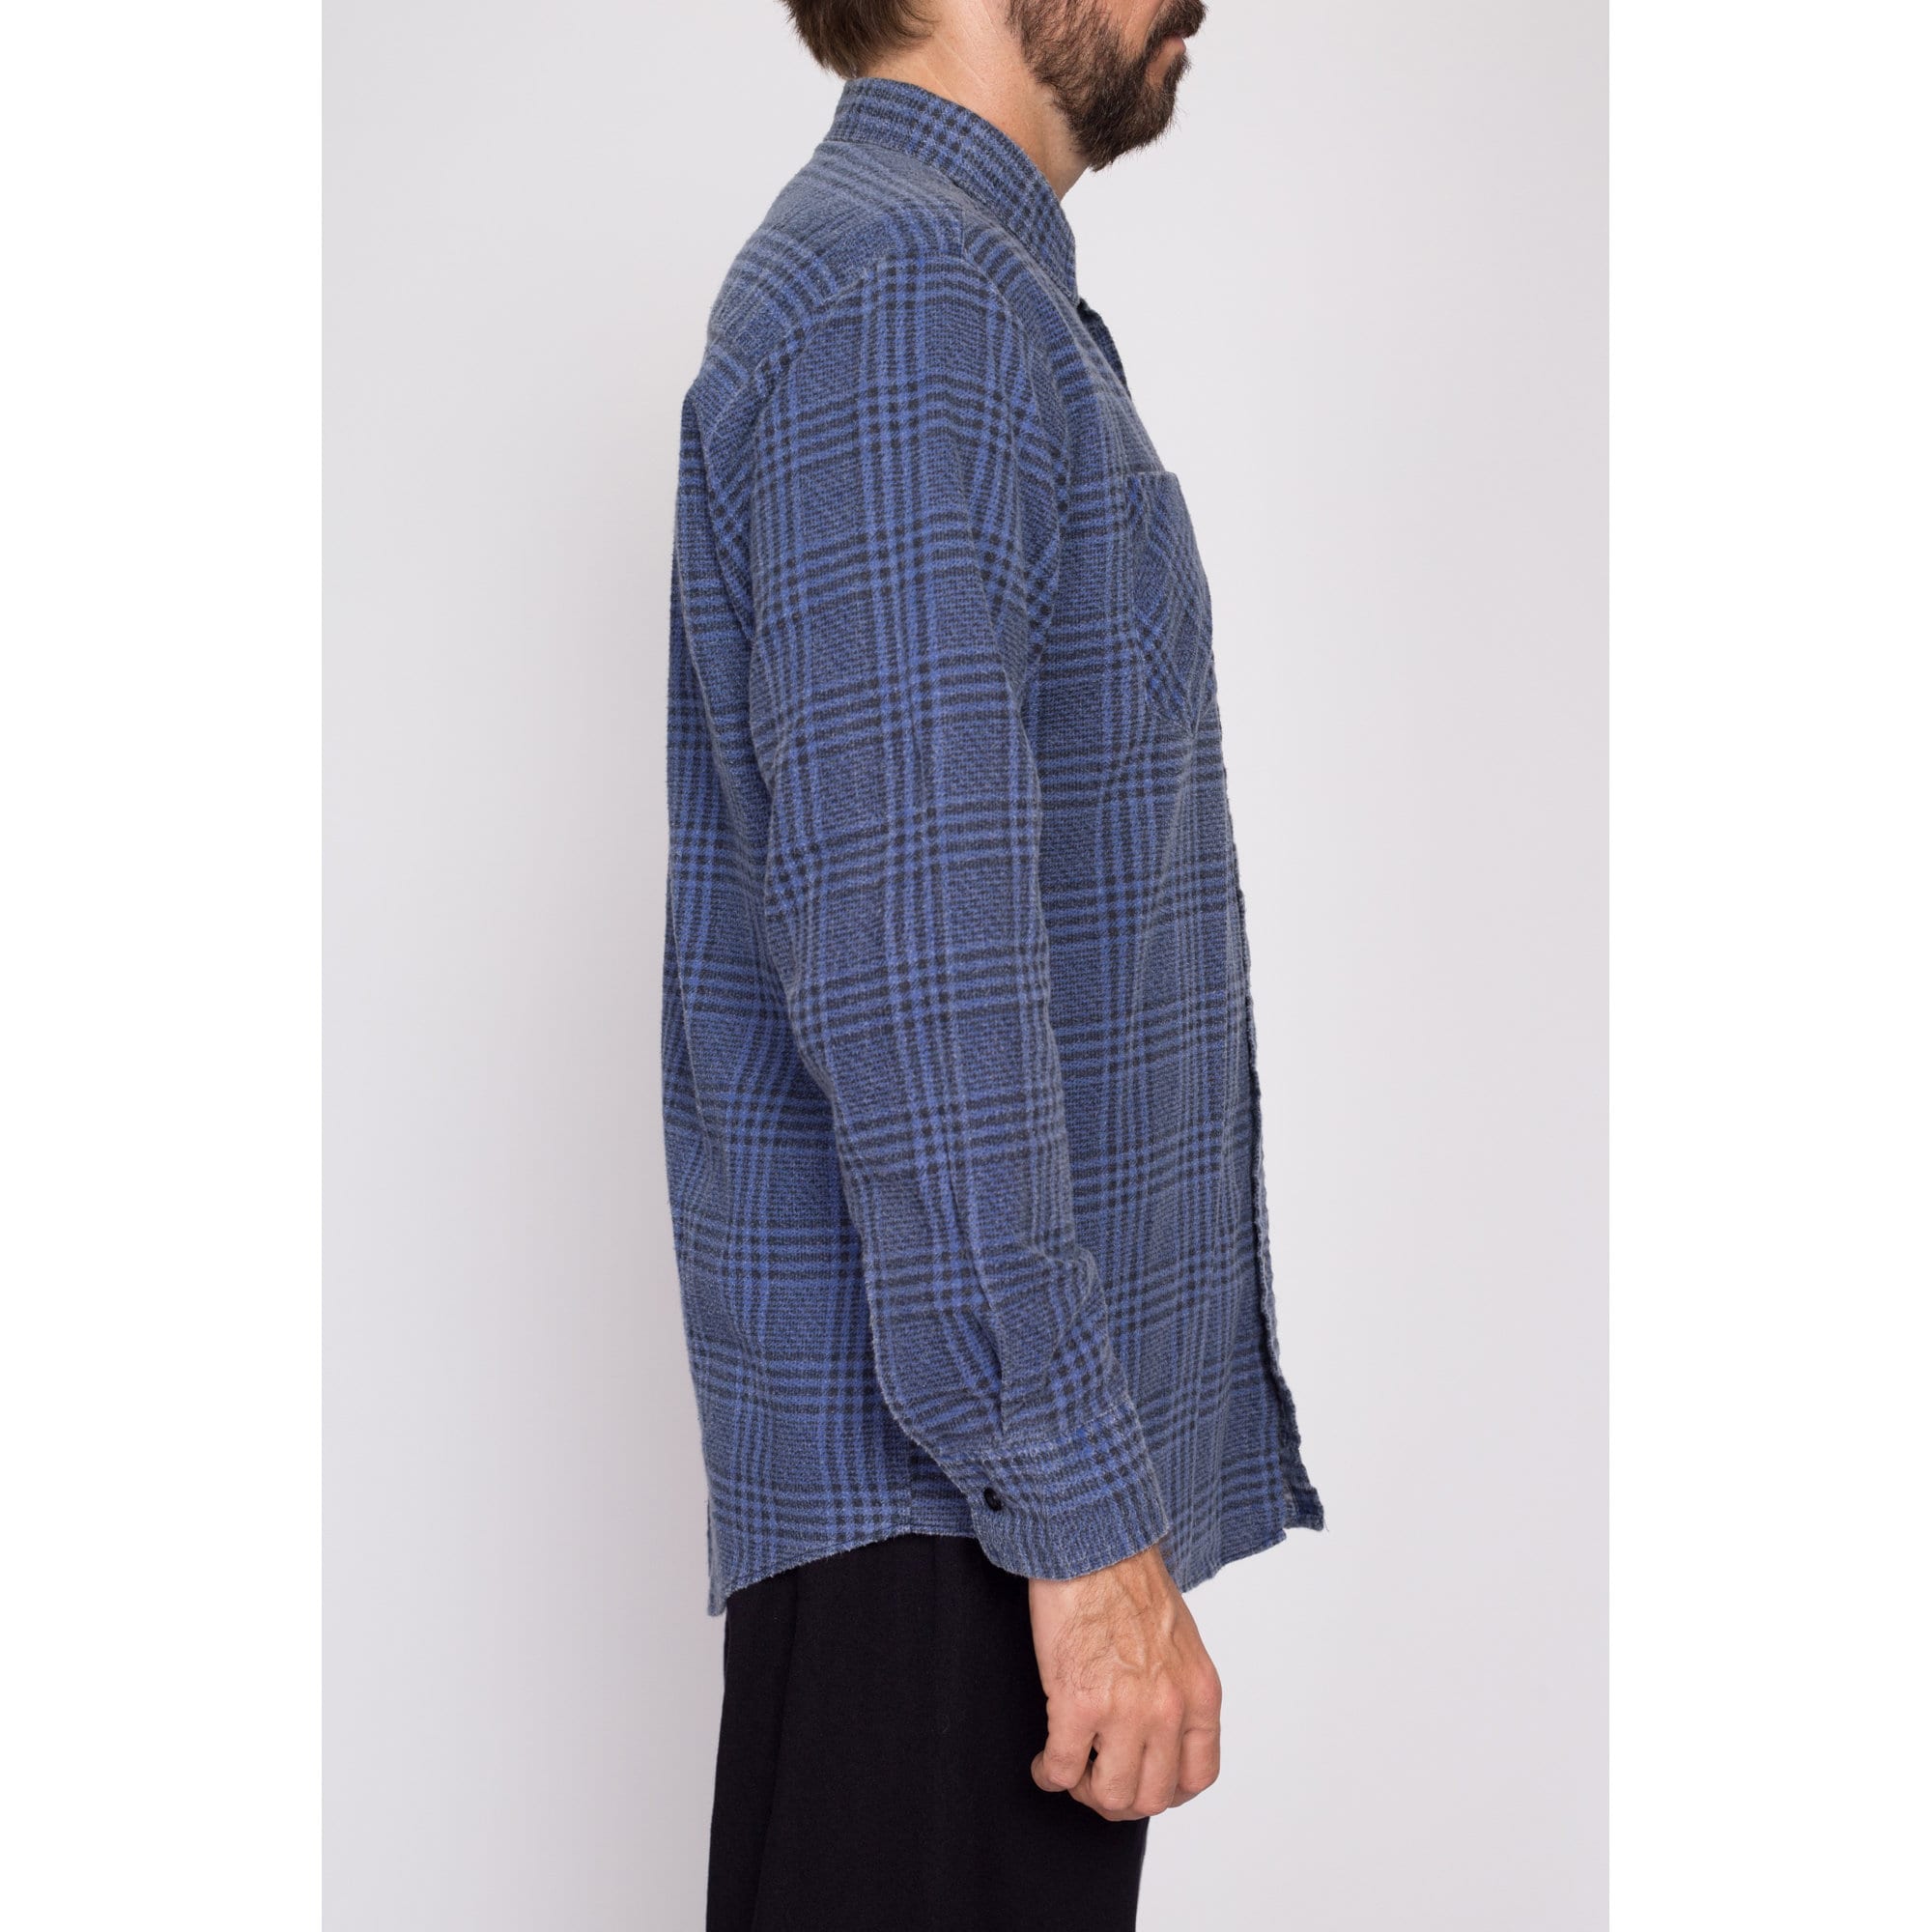 90s Blue Plaid Flannel Shirt - Men's Large Tall